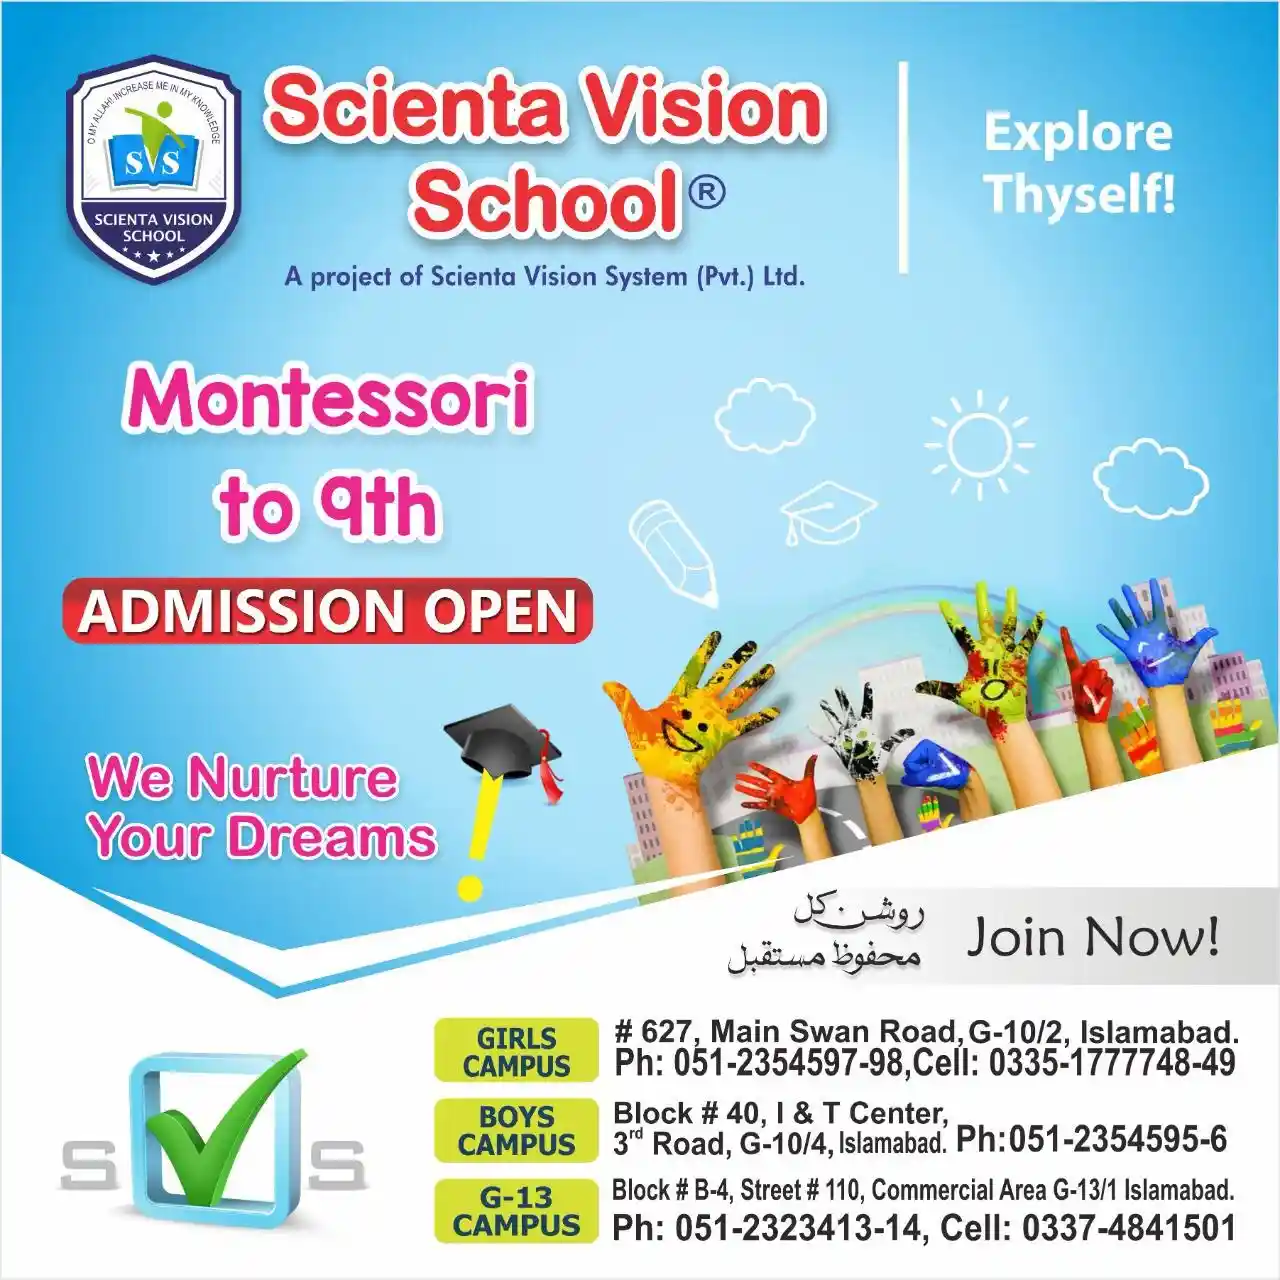 Admissions Open Montessori to 9th - We nurture your dreams